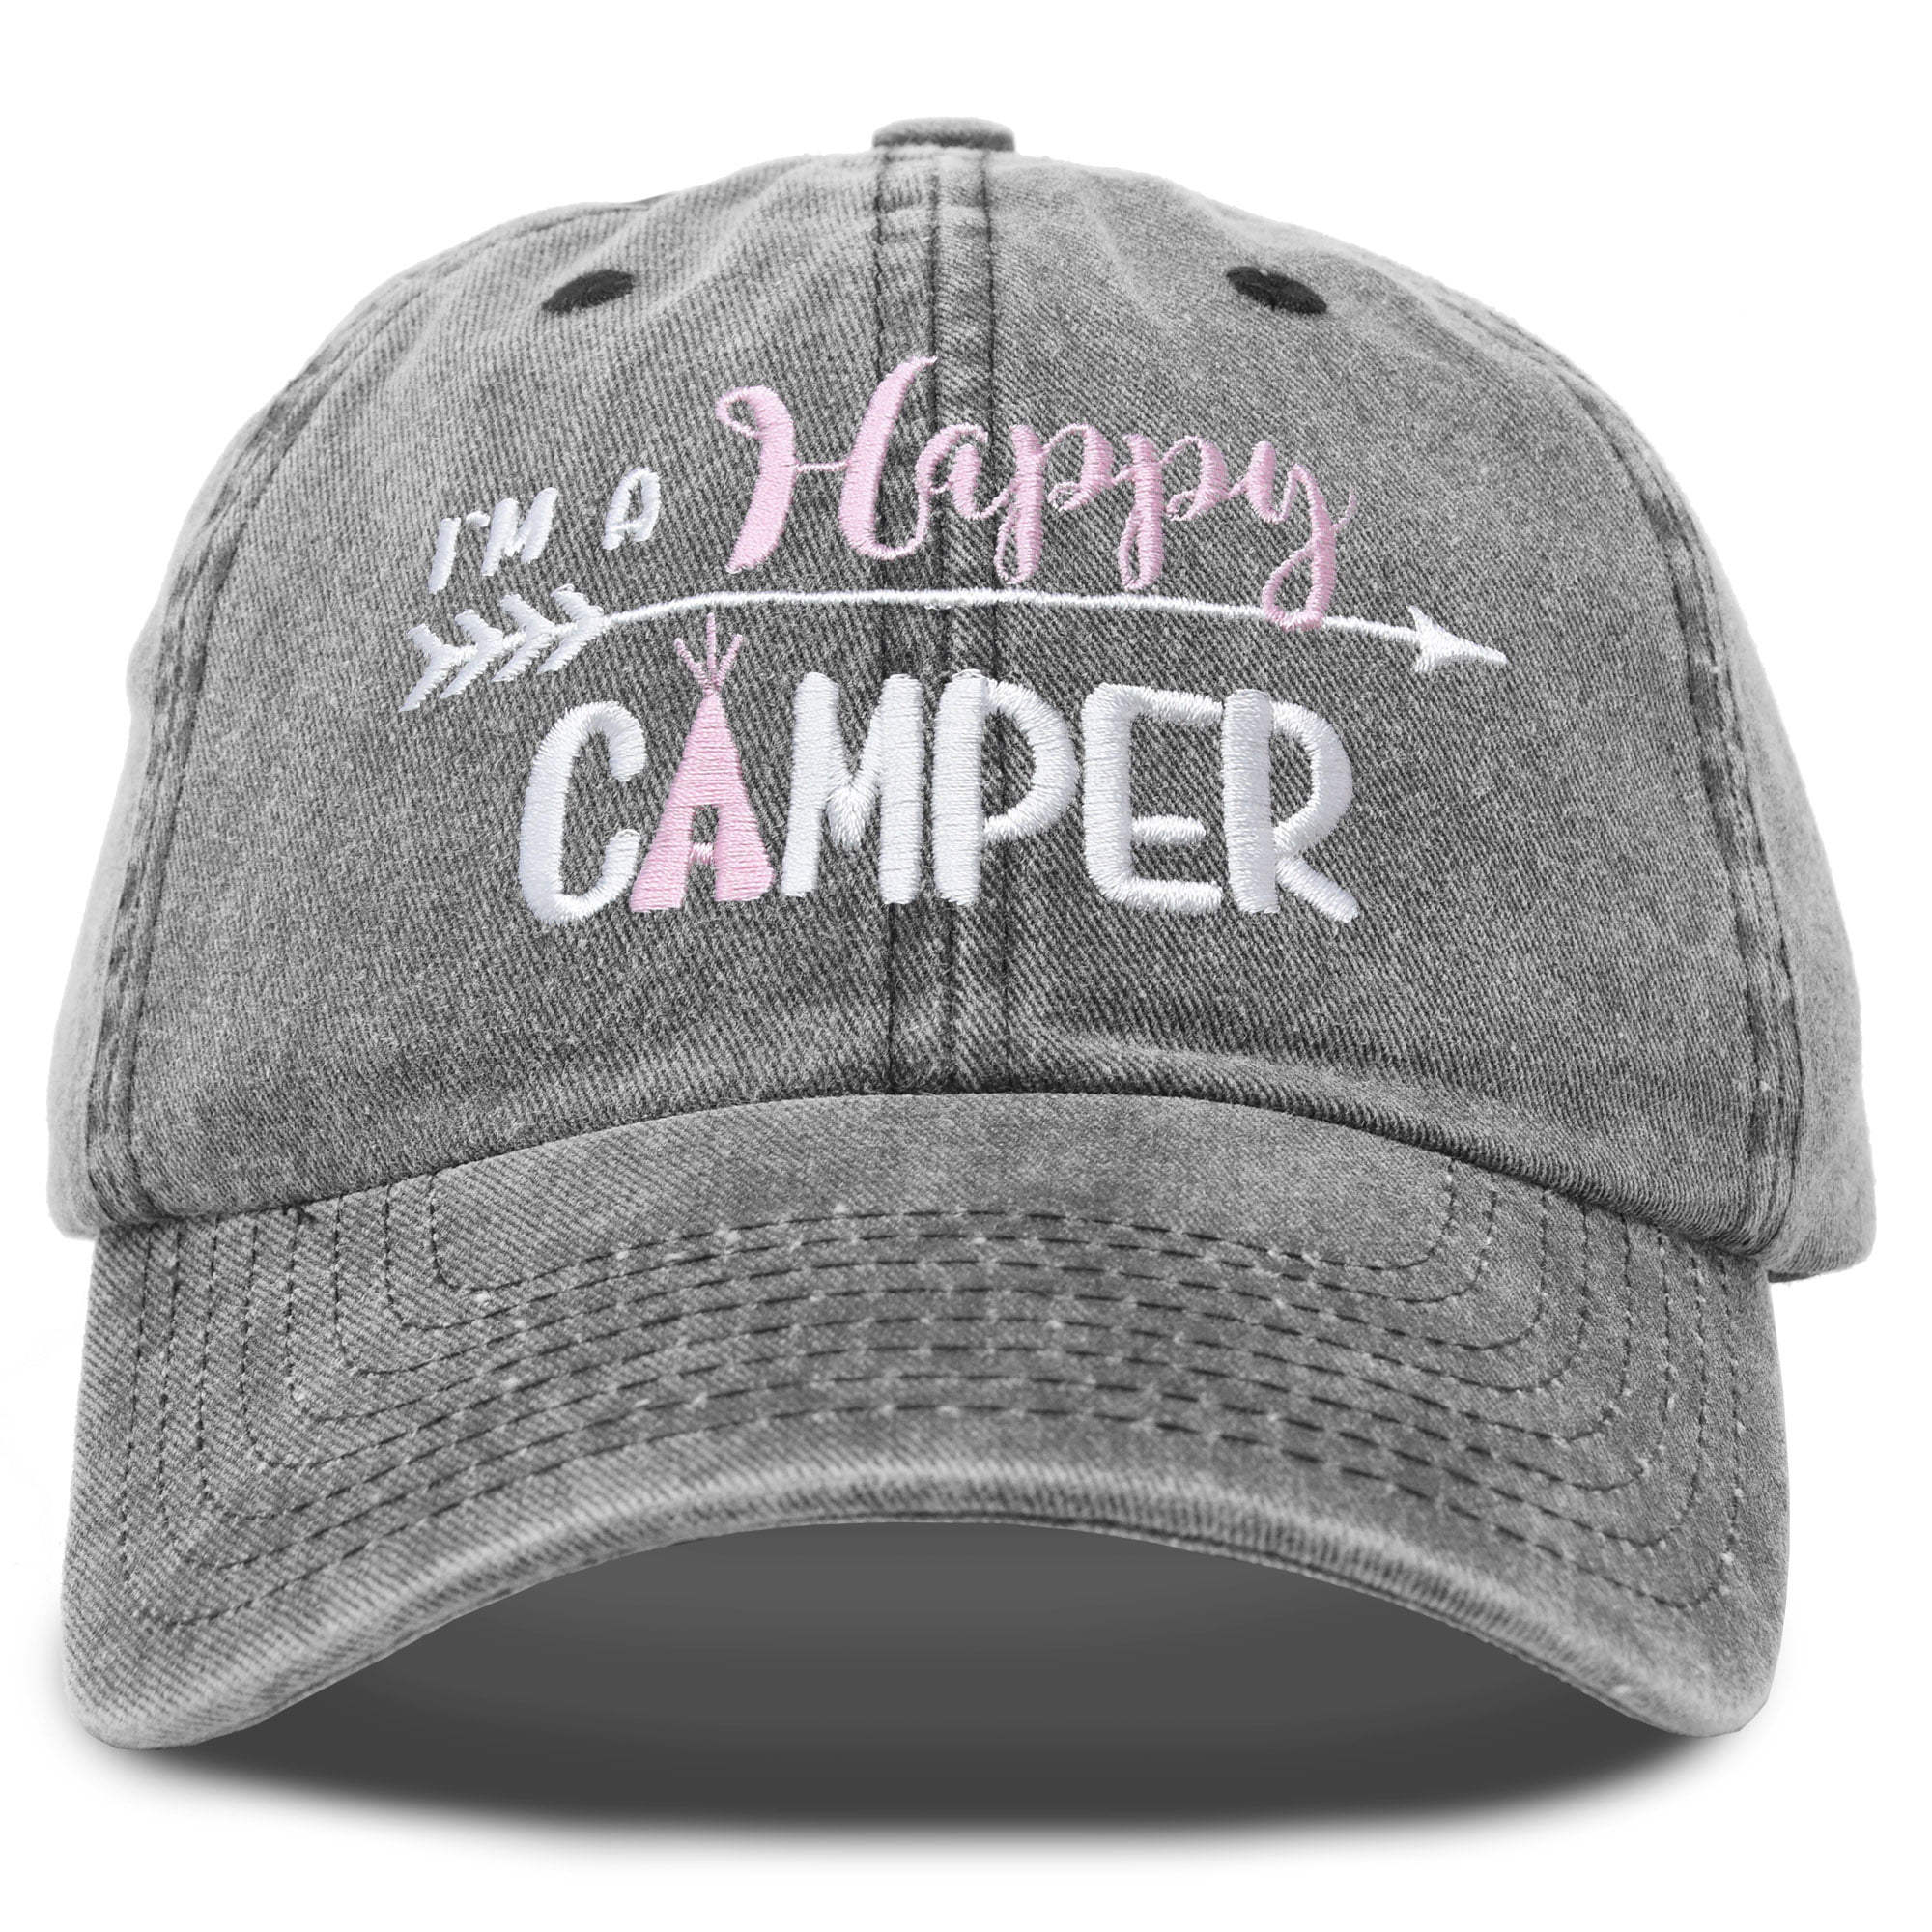 Li2u-id Happy Camper Toddler Cap Adjustable Baseball Cap Mesh Cap 